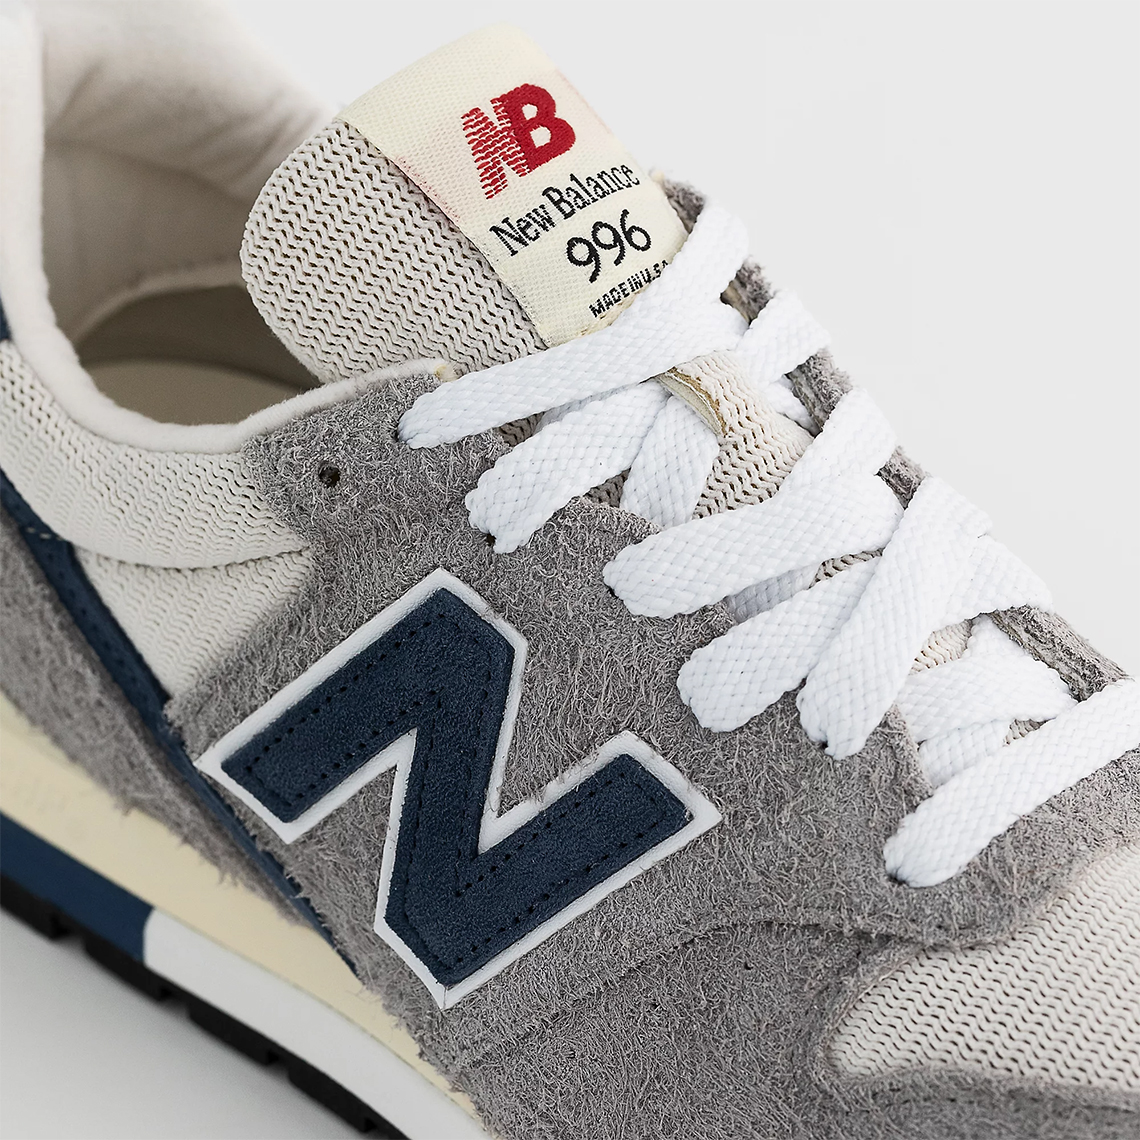 New Balance 996 Made In USA "Grey/Navy" | SneakerNews.com